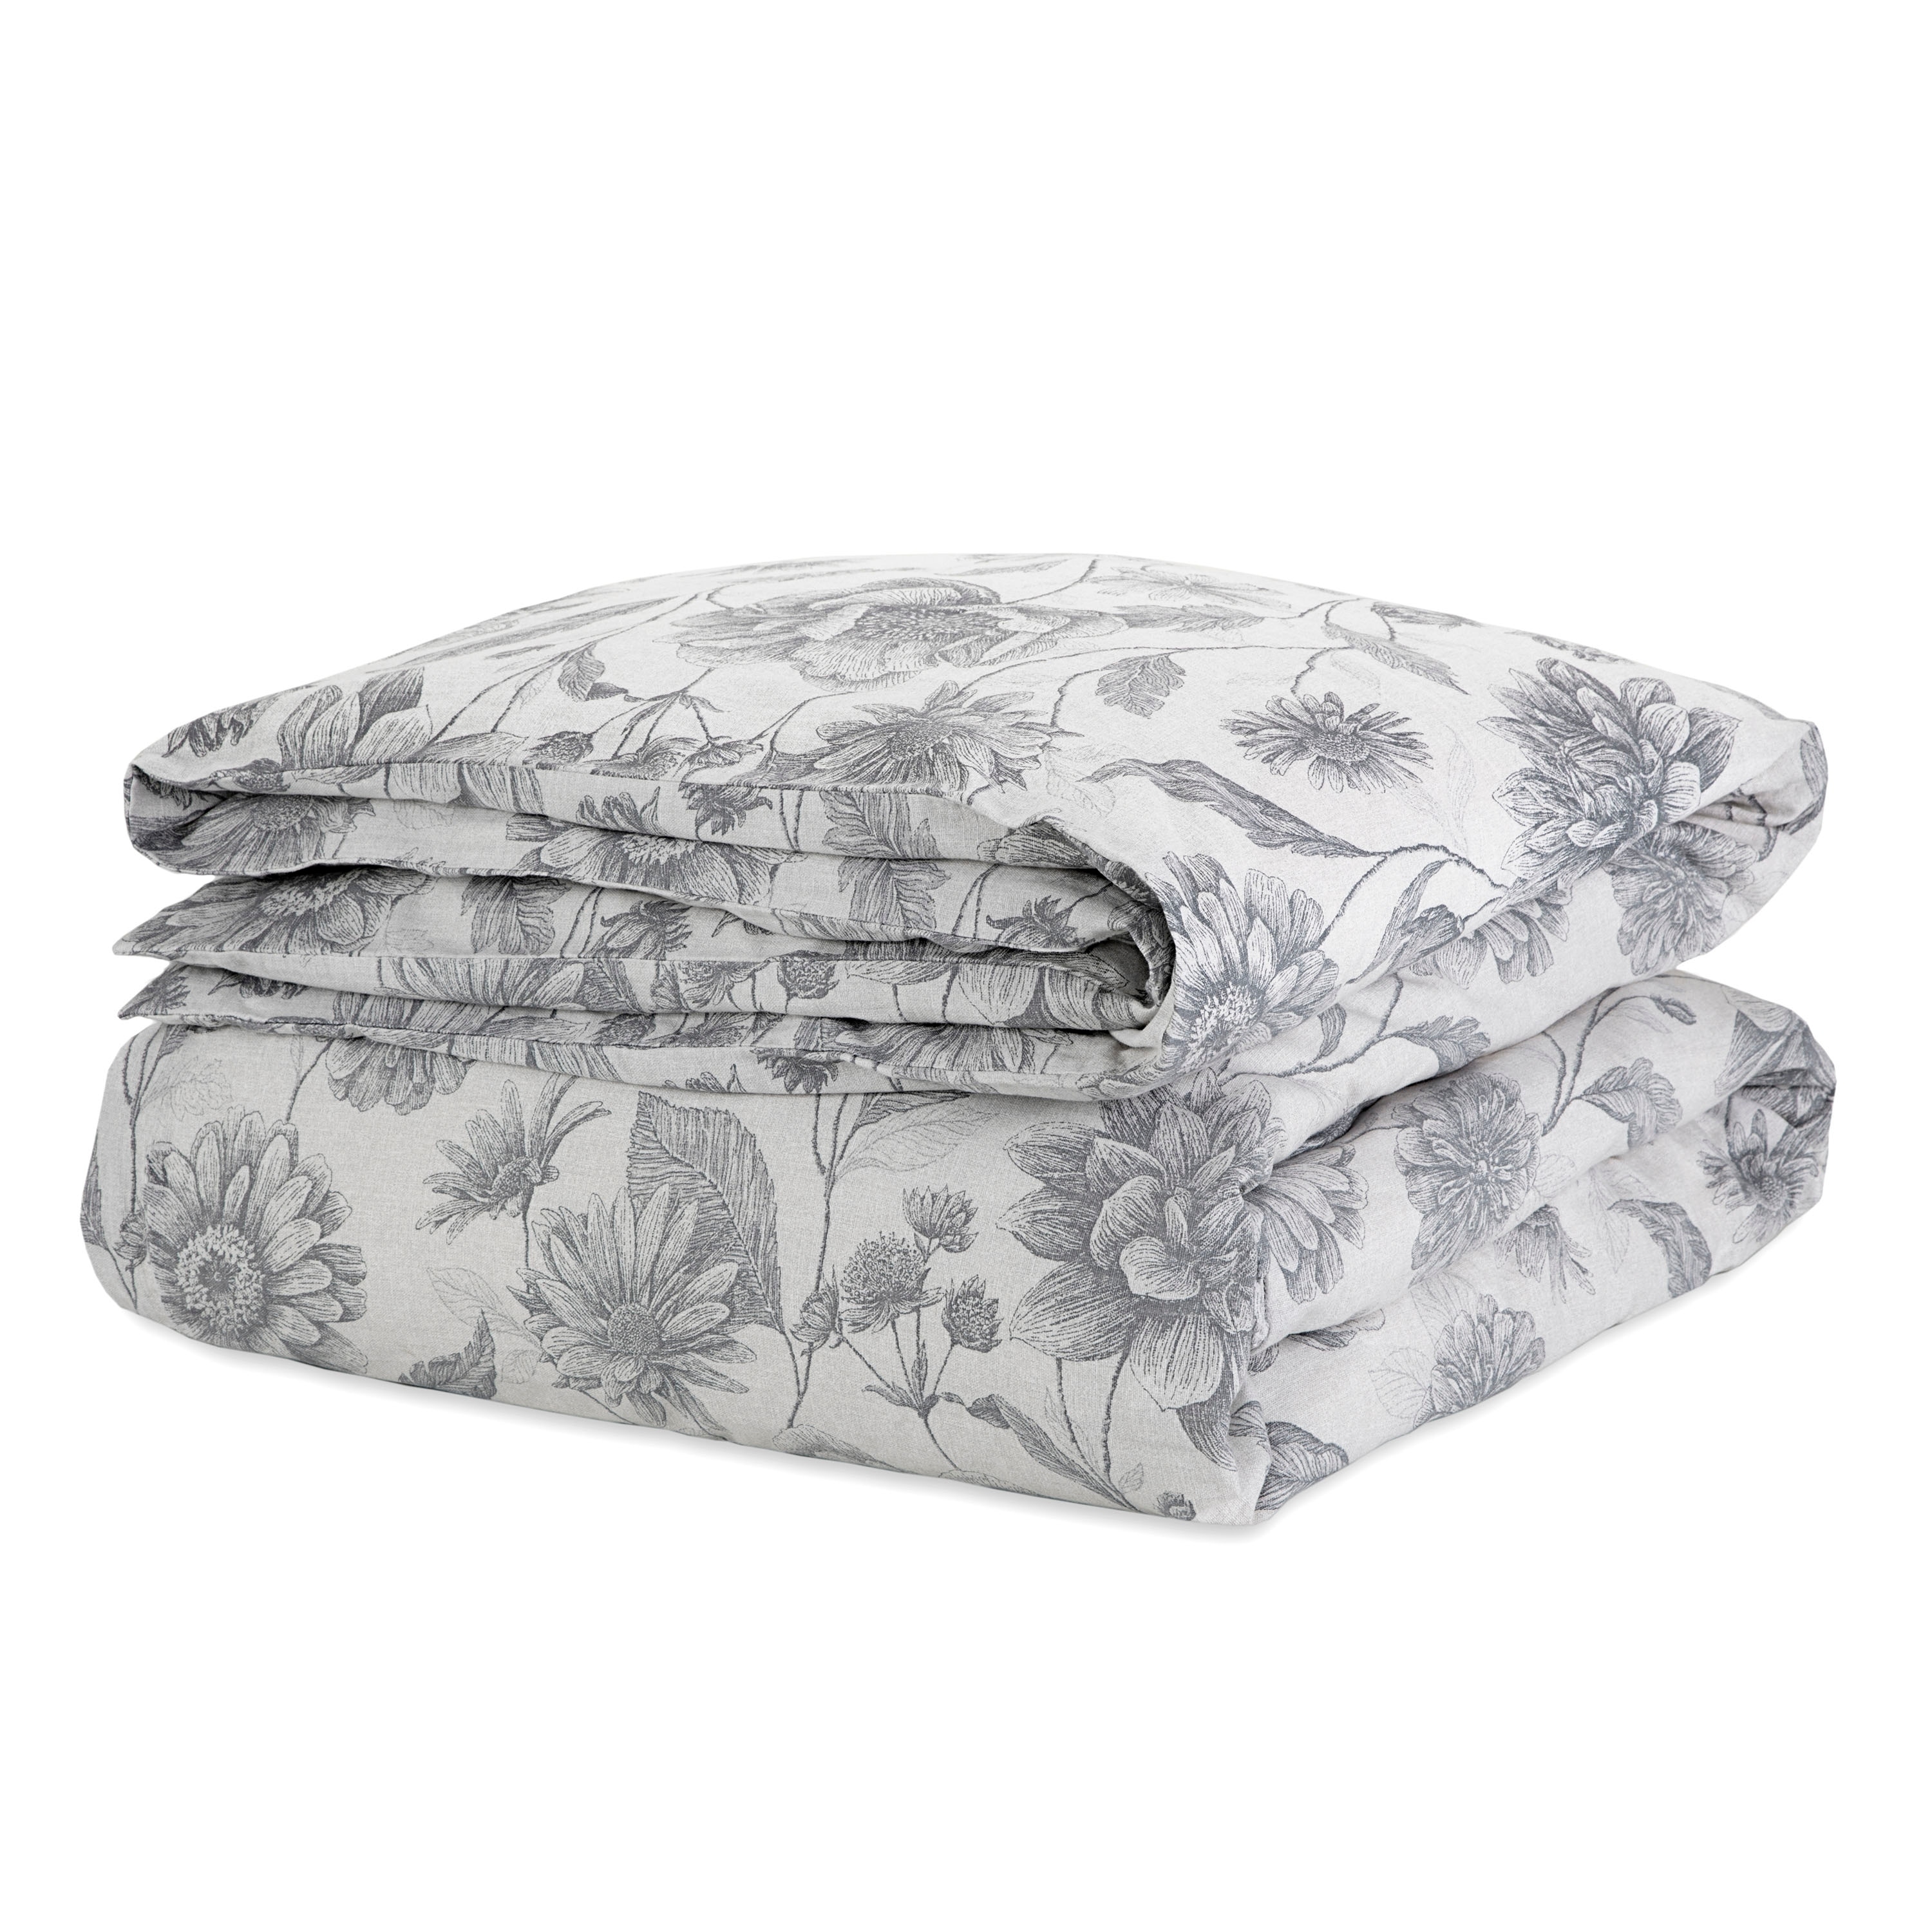 Comfort Wash Sienna Twin Comforter Set by Martex EcoPure